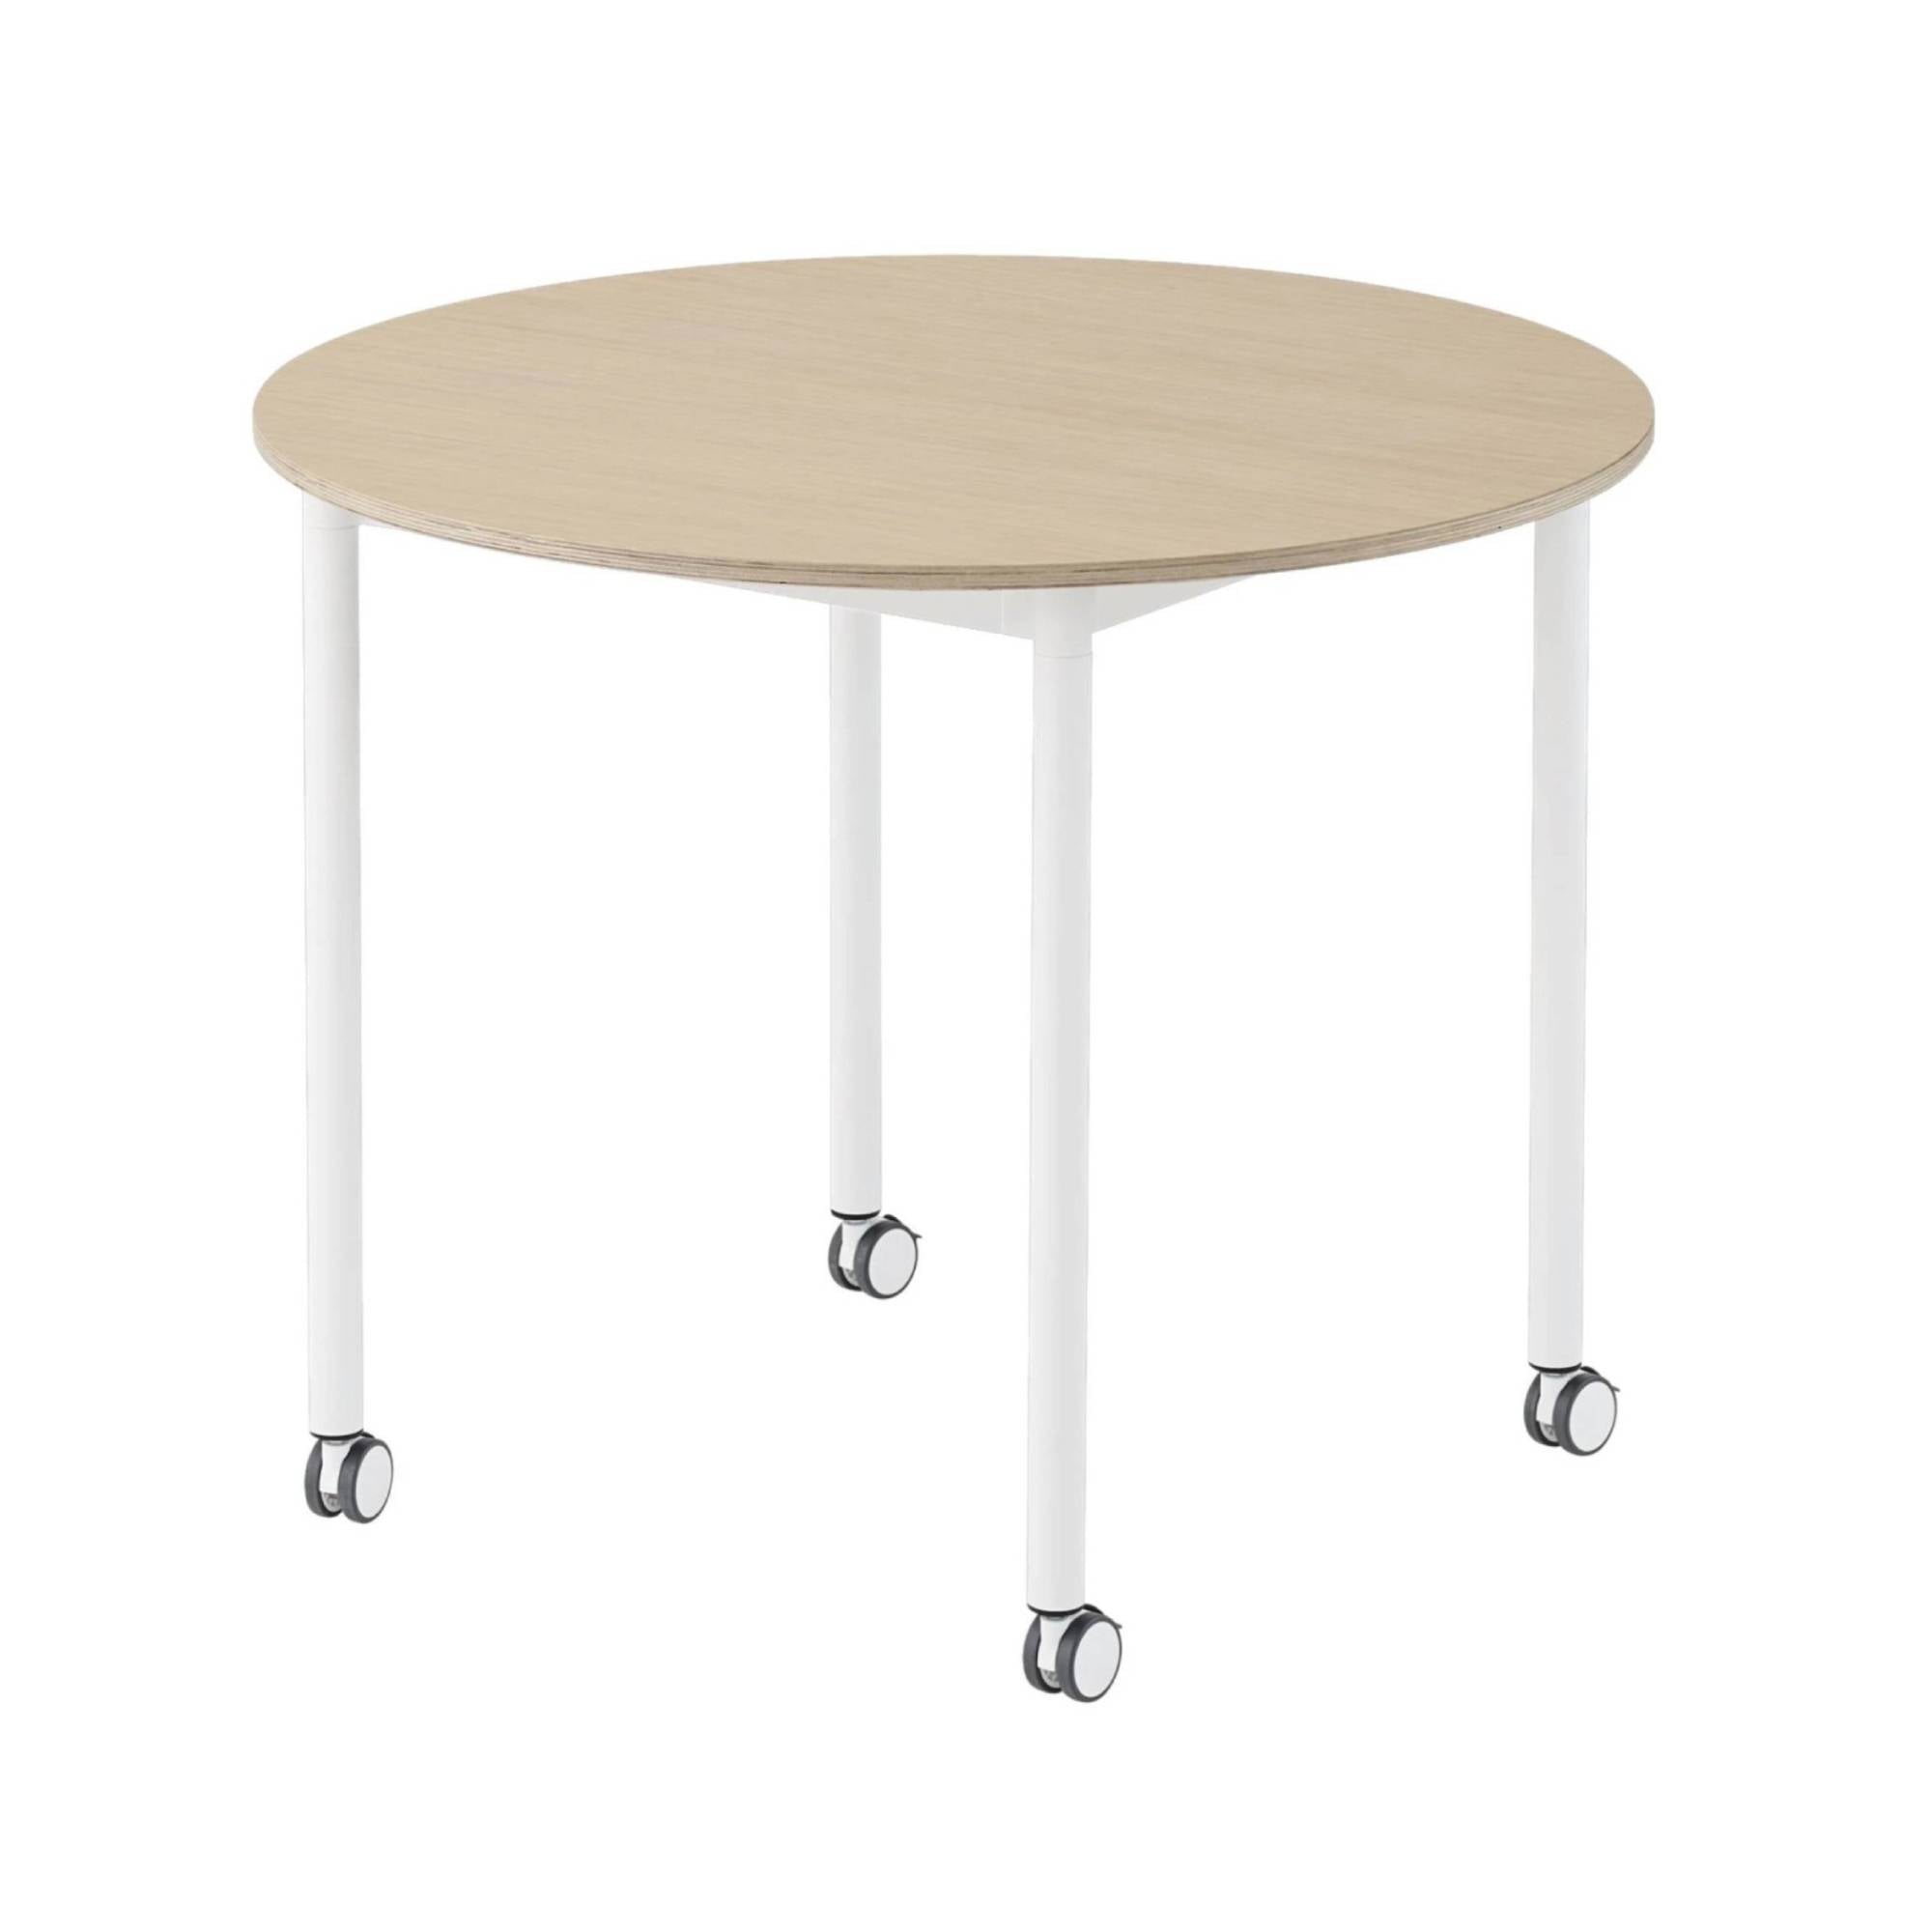 Base Table with Castors: Round + Medium - 43.3